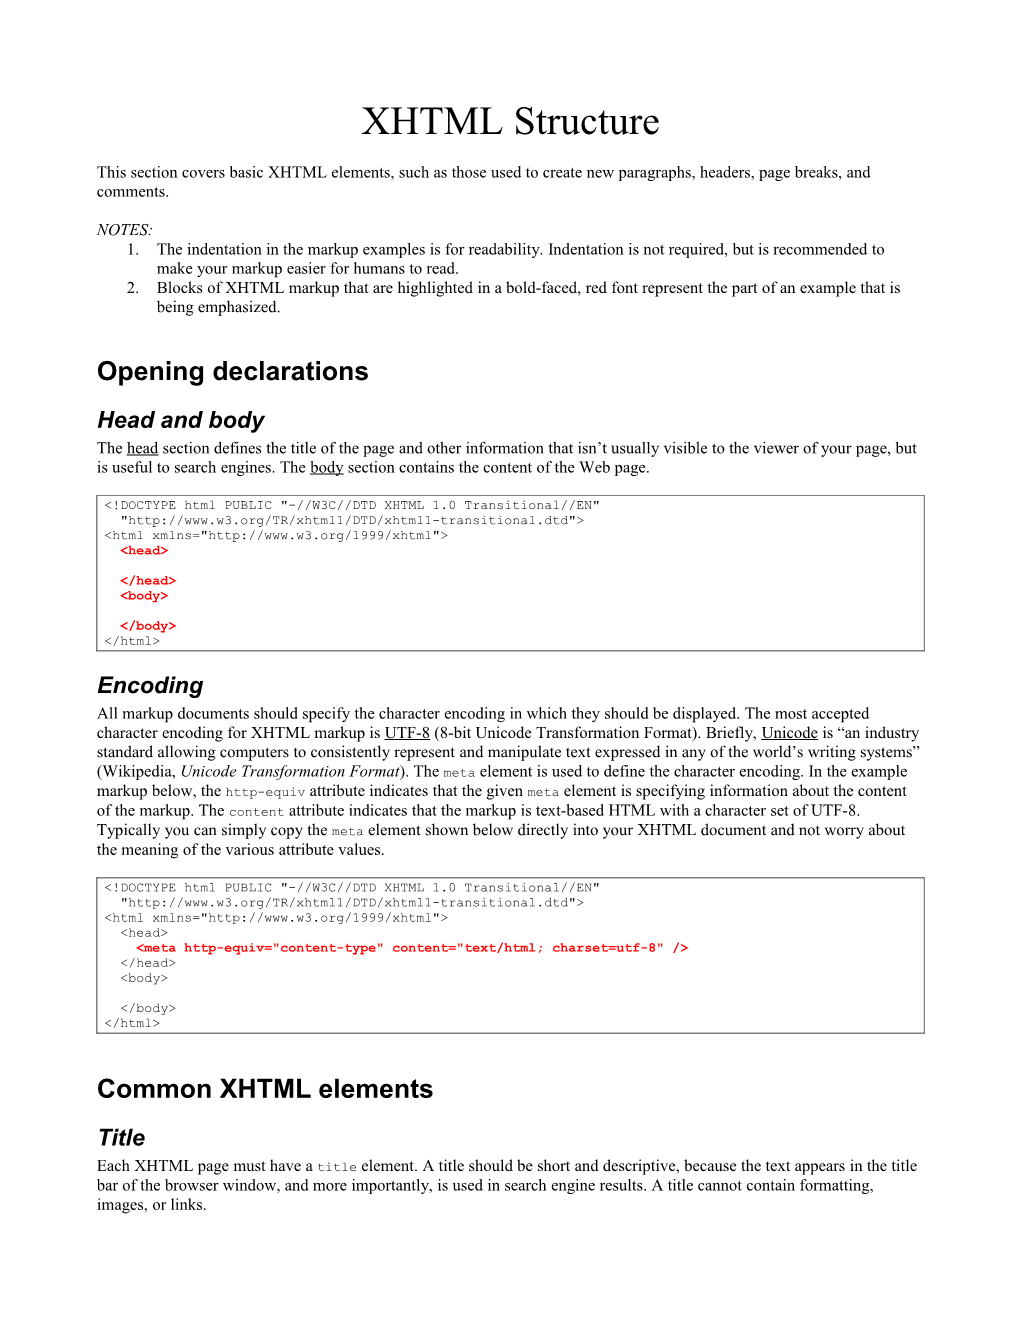 XHTML - Basic XHTML Structure